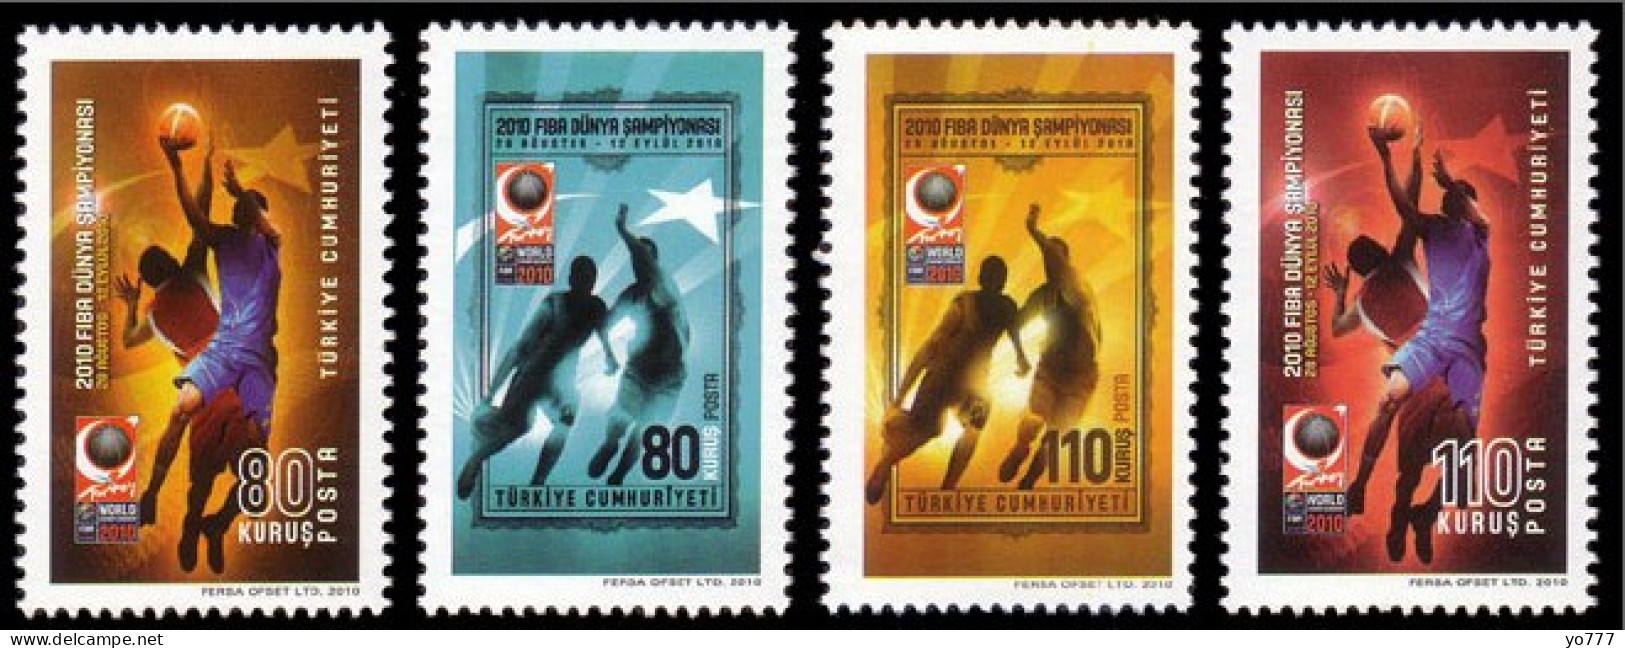 (3836-39) TURKEY FIBA WORLD BASKETBALL CHAMPIONSHIP FOR MEN STAMPS SET MNH** - Unused Stamps